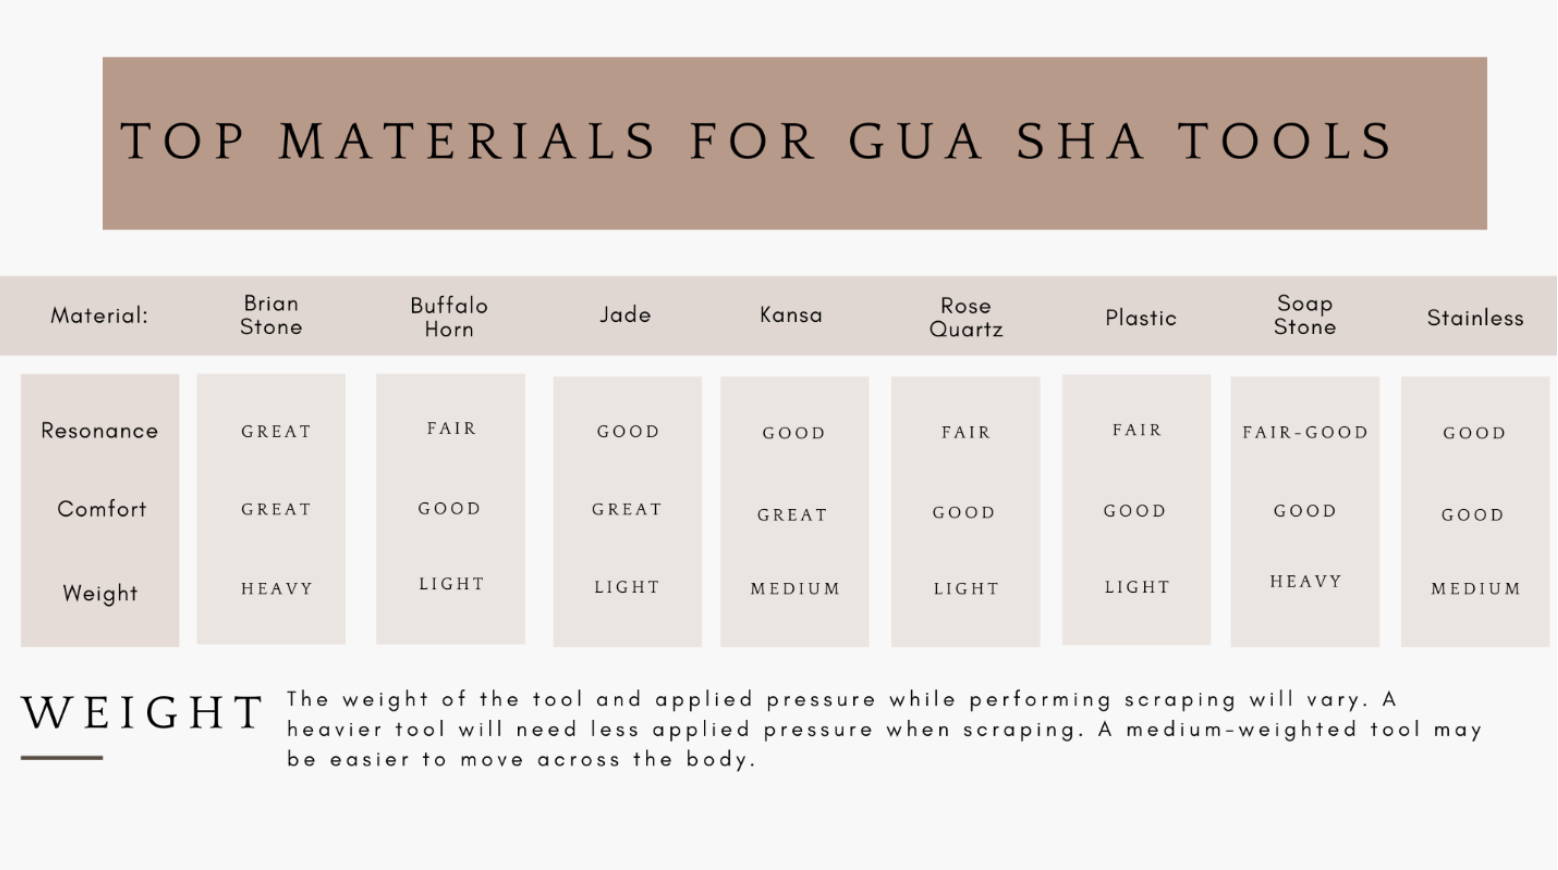 A Chart showing the top materials for Gua Sha tools